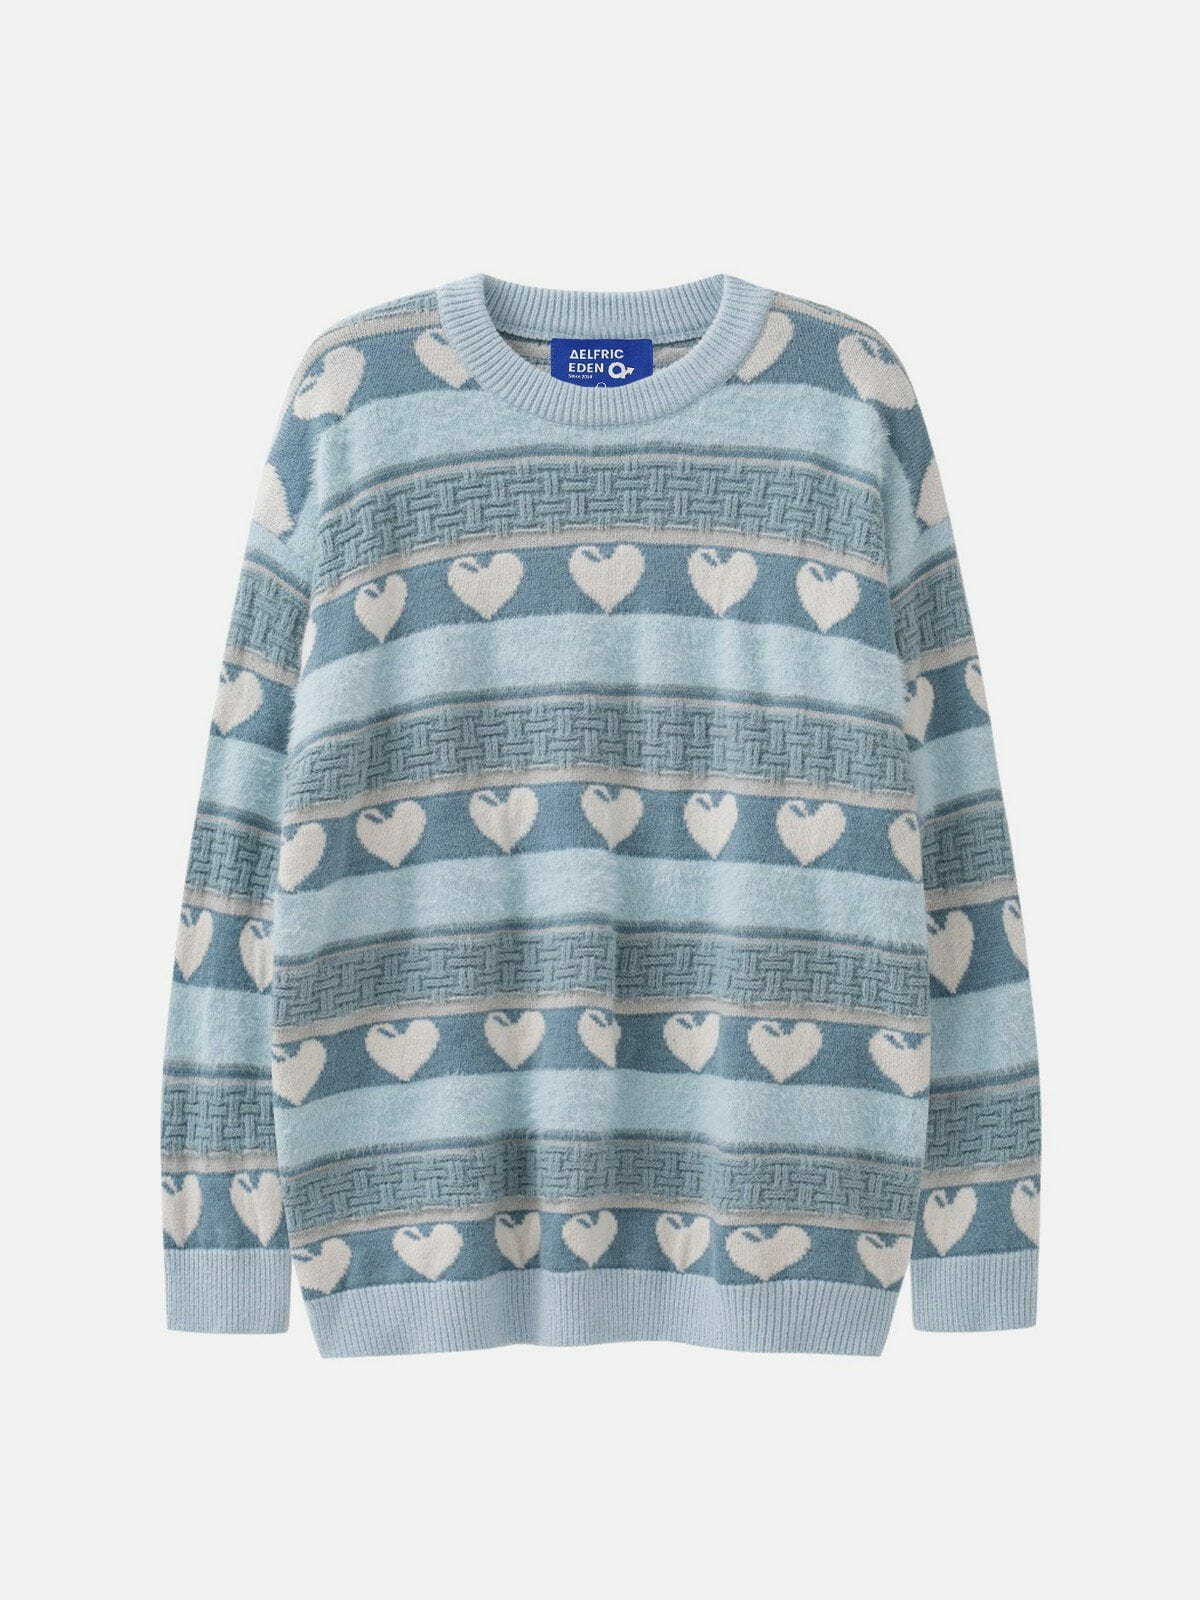 youthful striped heart sweater   chic jacquard design 7603